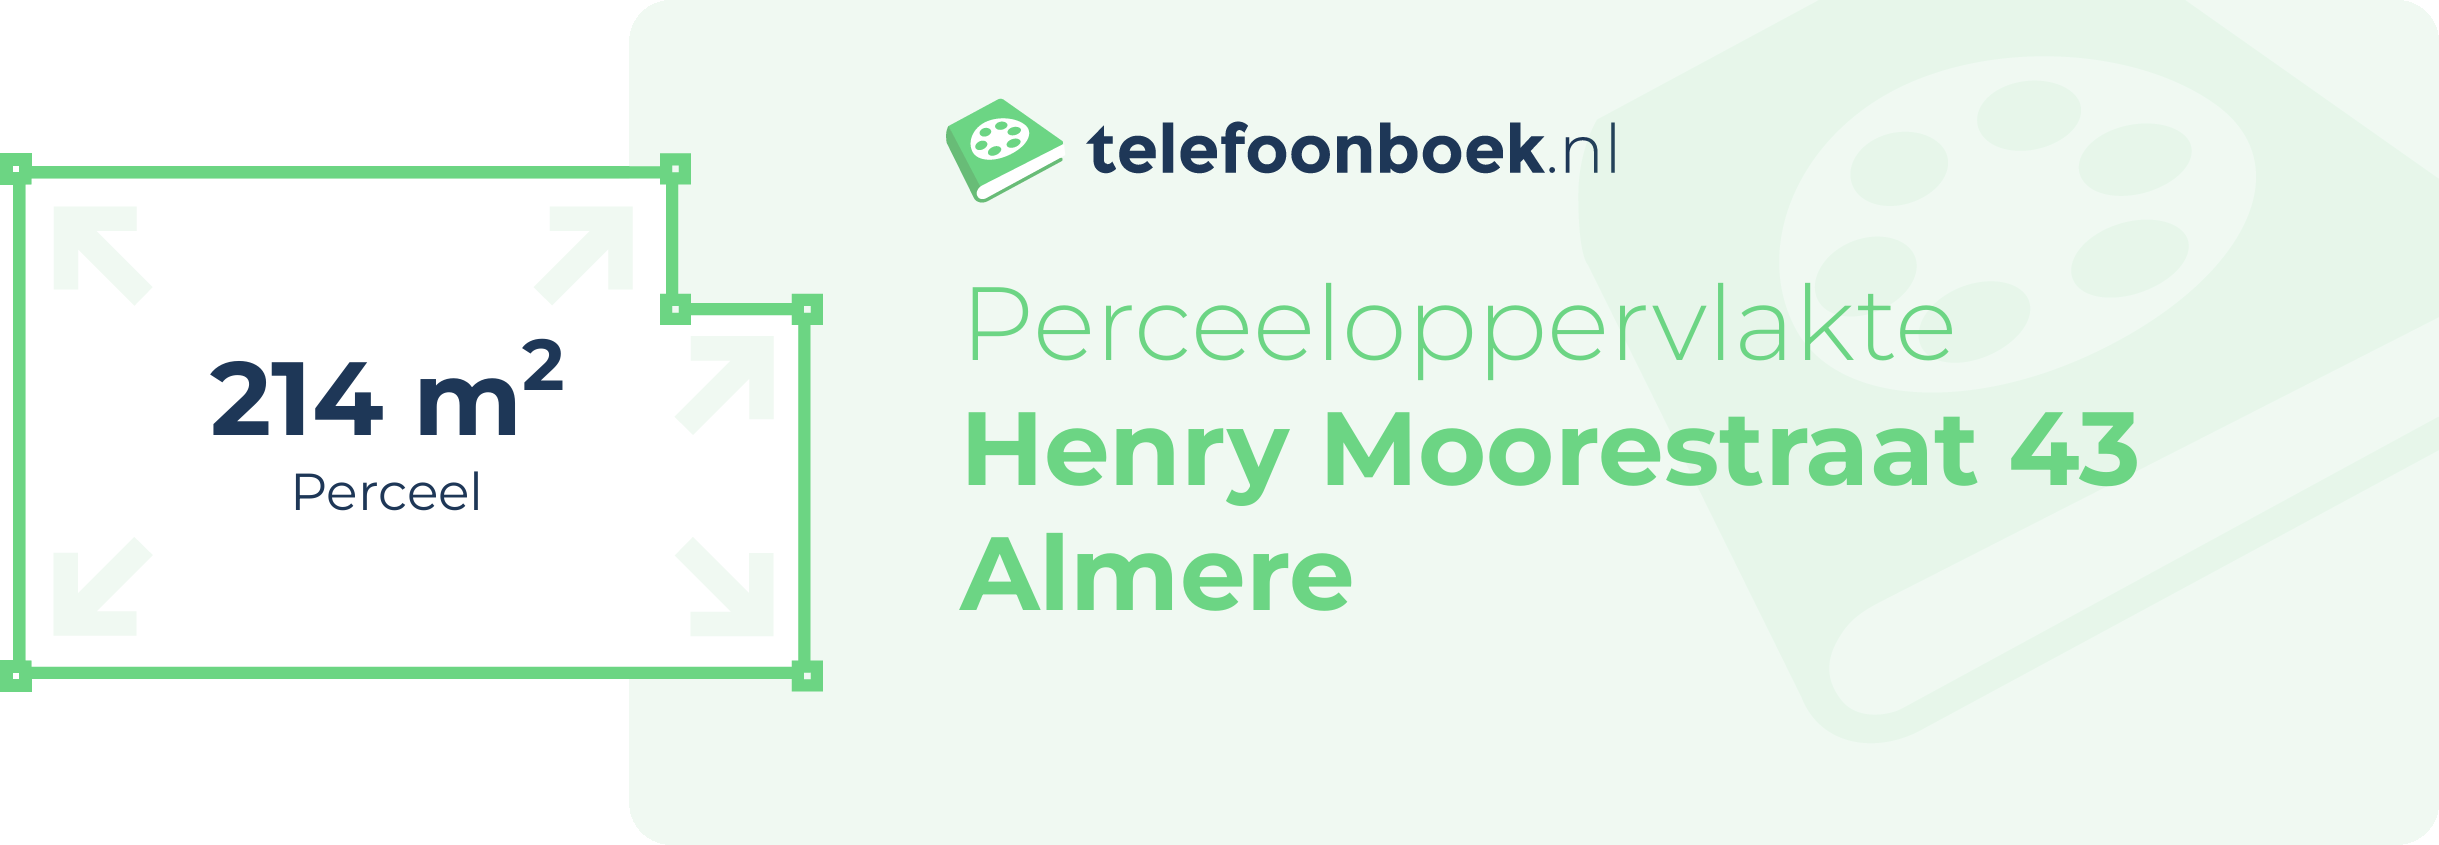 Perceeloppervlakte Henry Moorestraat 43 Almere